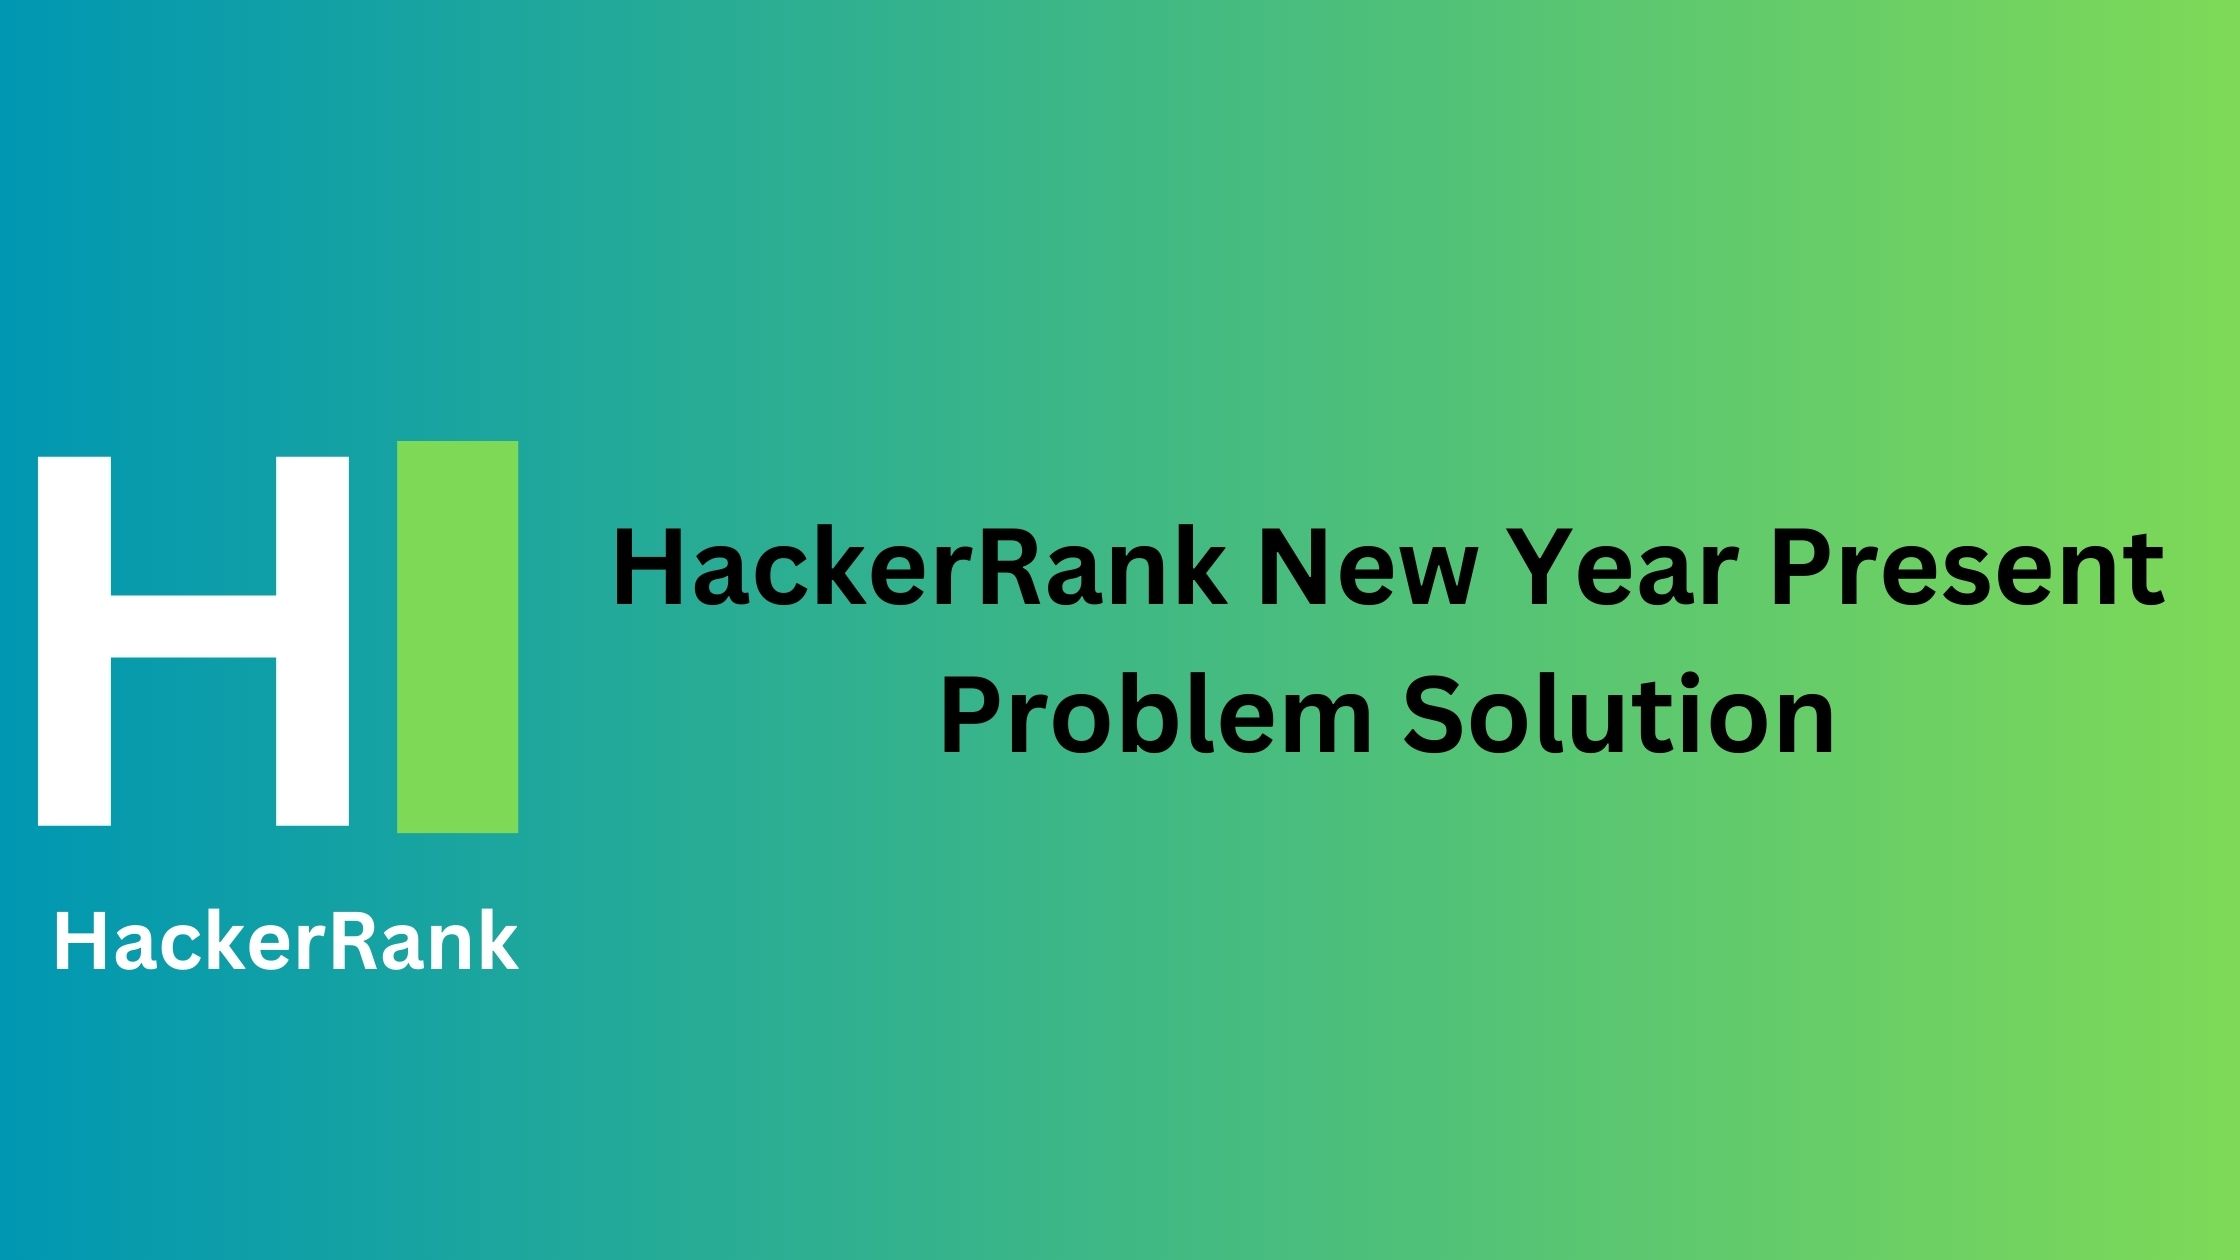 HackerRank New Year Present Problem Solution